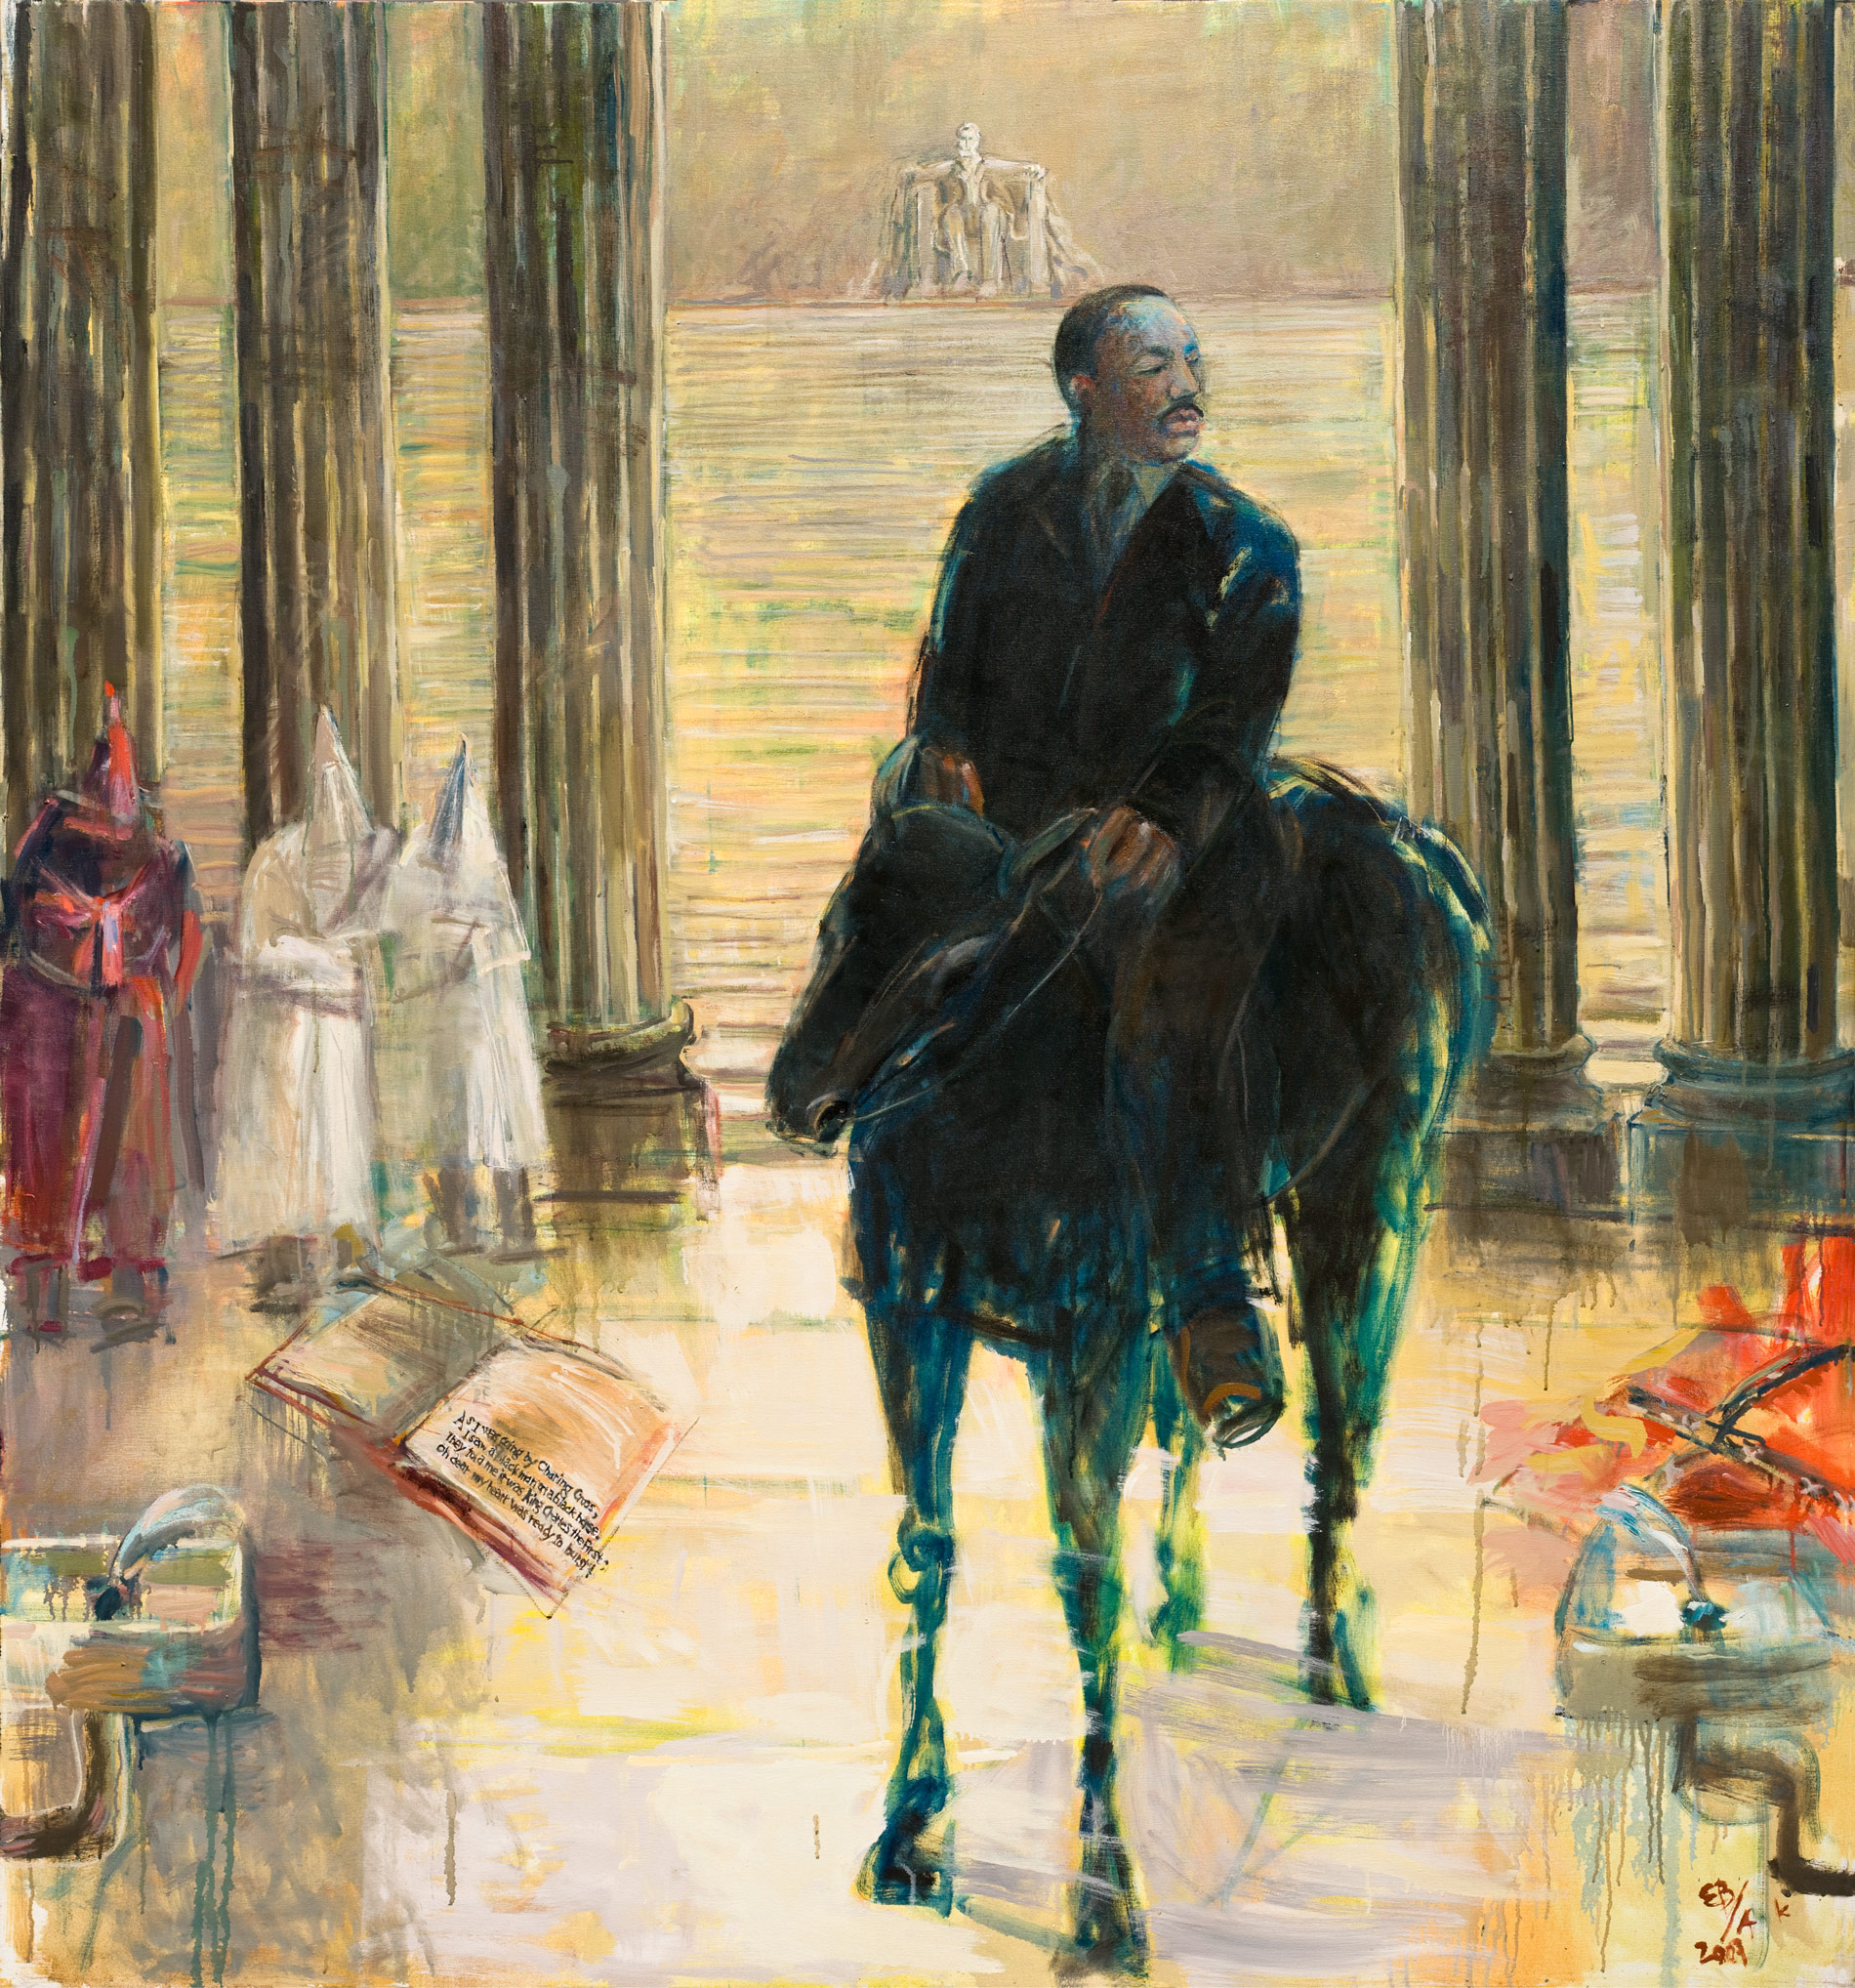 Black Man On A Black Horse, oil on canvas, 72 x 66", 2007